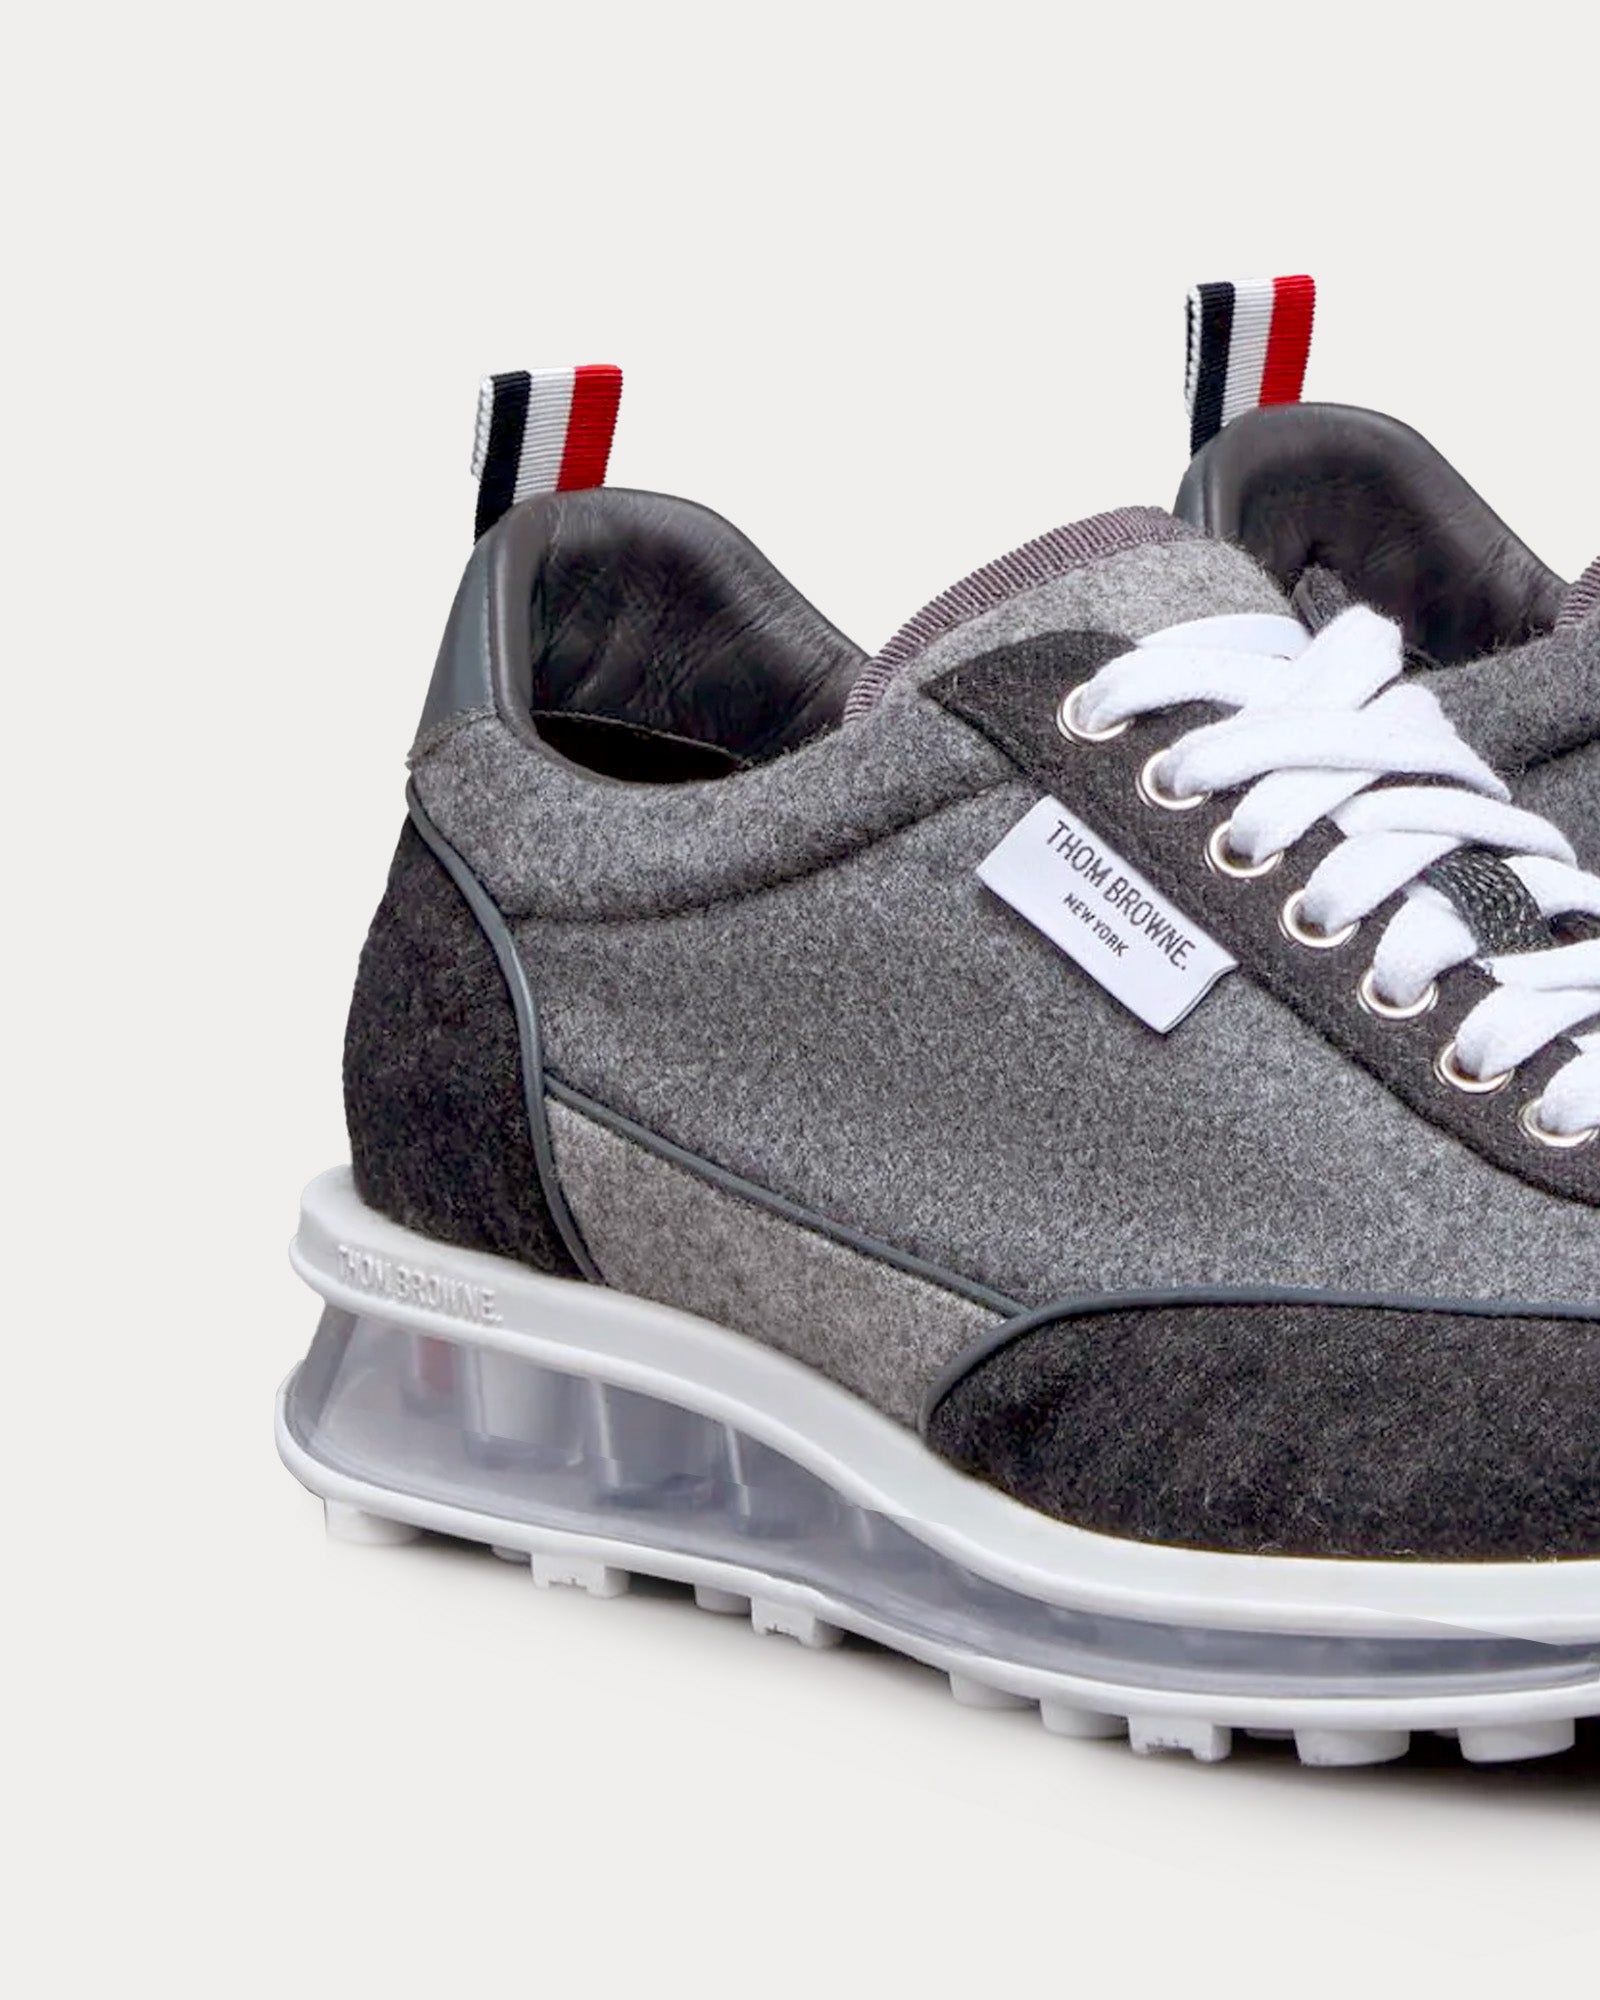 Thom Browne - Tech Runner Clear Sole Wool Flannel Grey / Black Low Top Sneakers